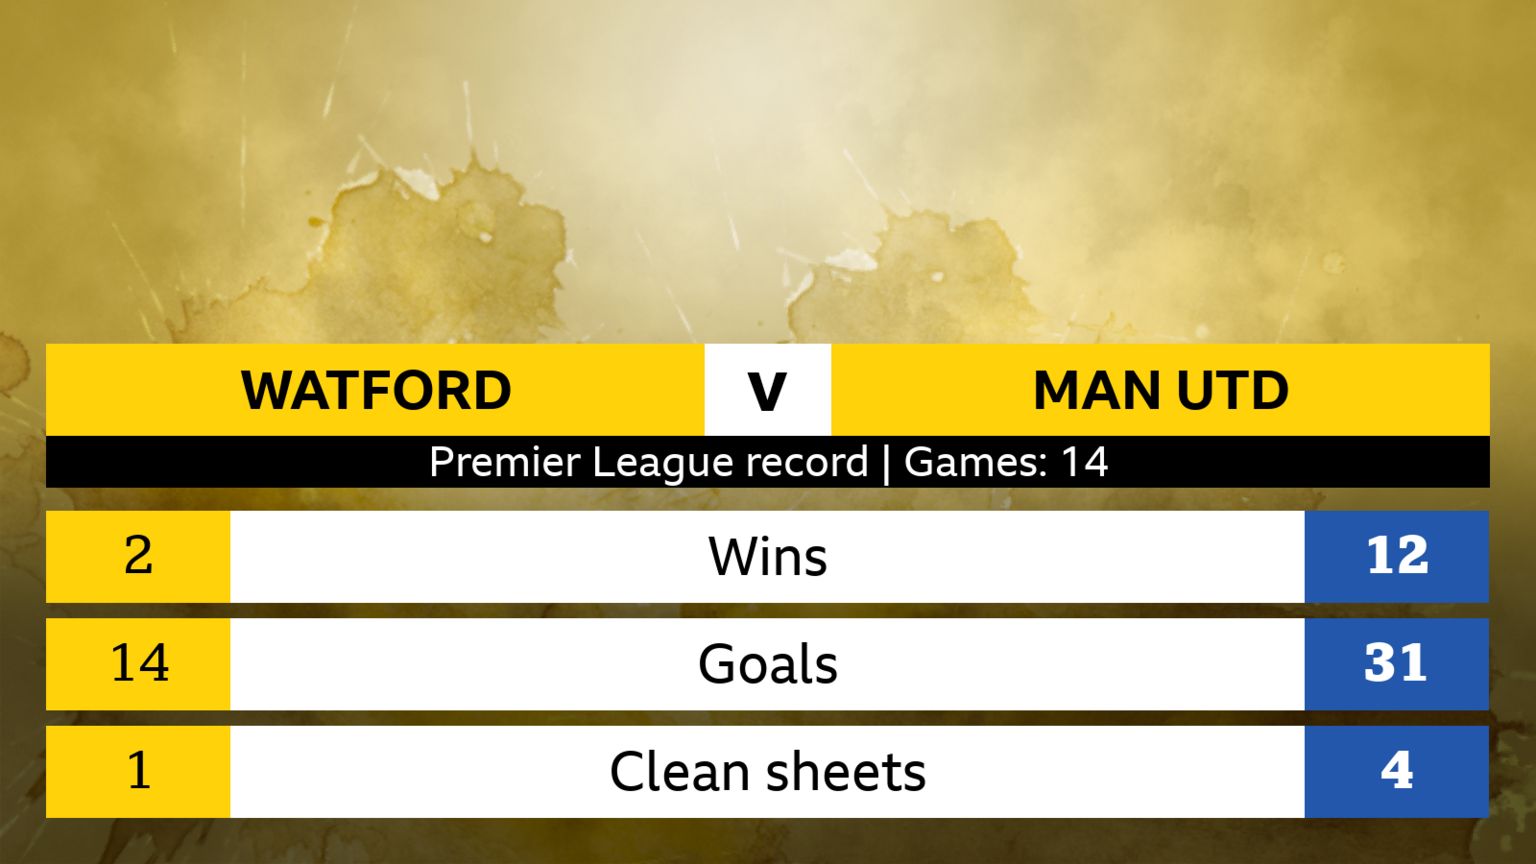 Premier League record, 14 games. Watford; 2 wins, 14 goals, 1 clean sheet. Man United; 12 wins, 31 goals, 4 clean sheets